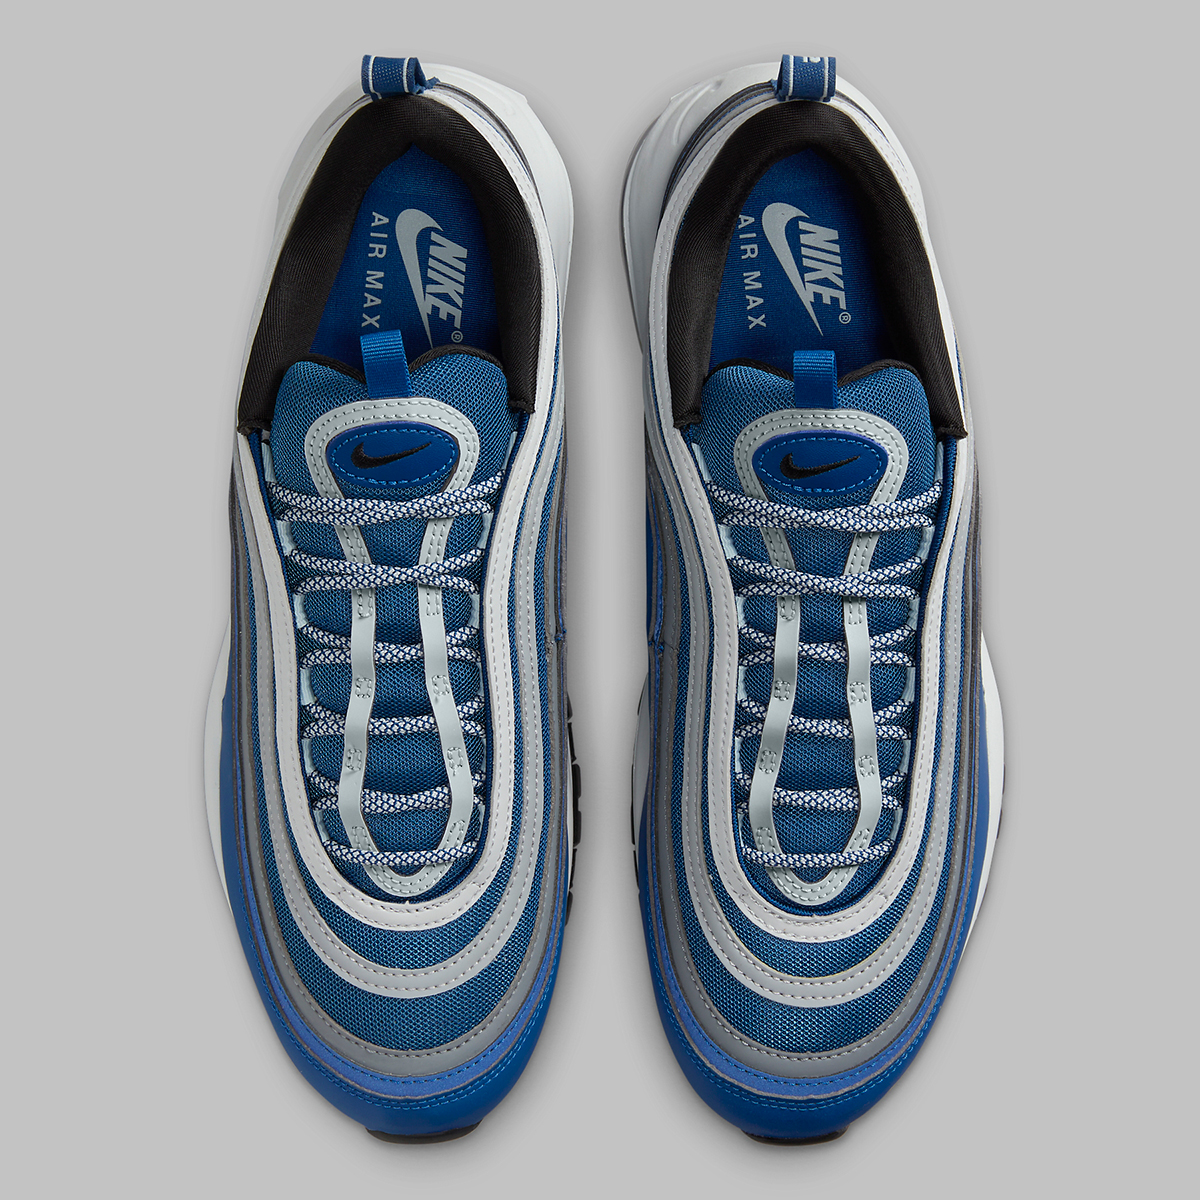 Nike grey nike sb snapback cap size comparison Court Blue Glacier Blue Pure Platinum Fn6957 400 3